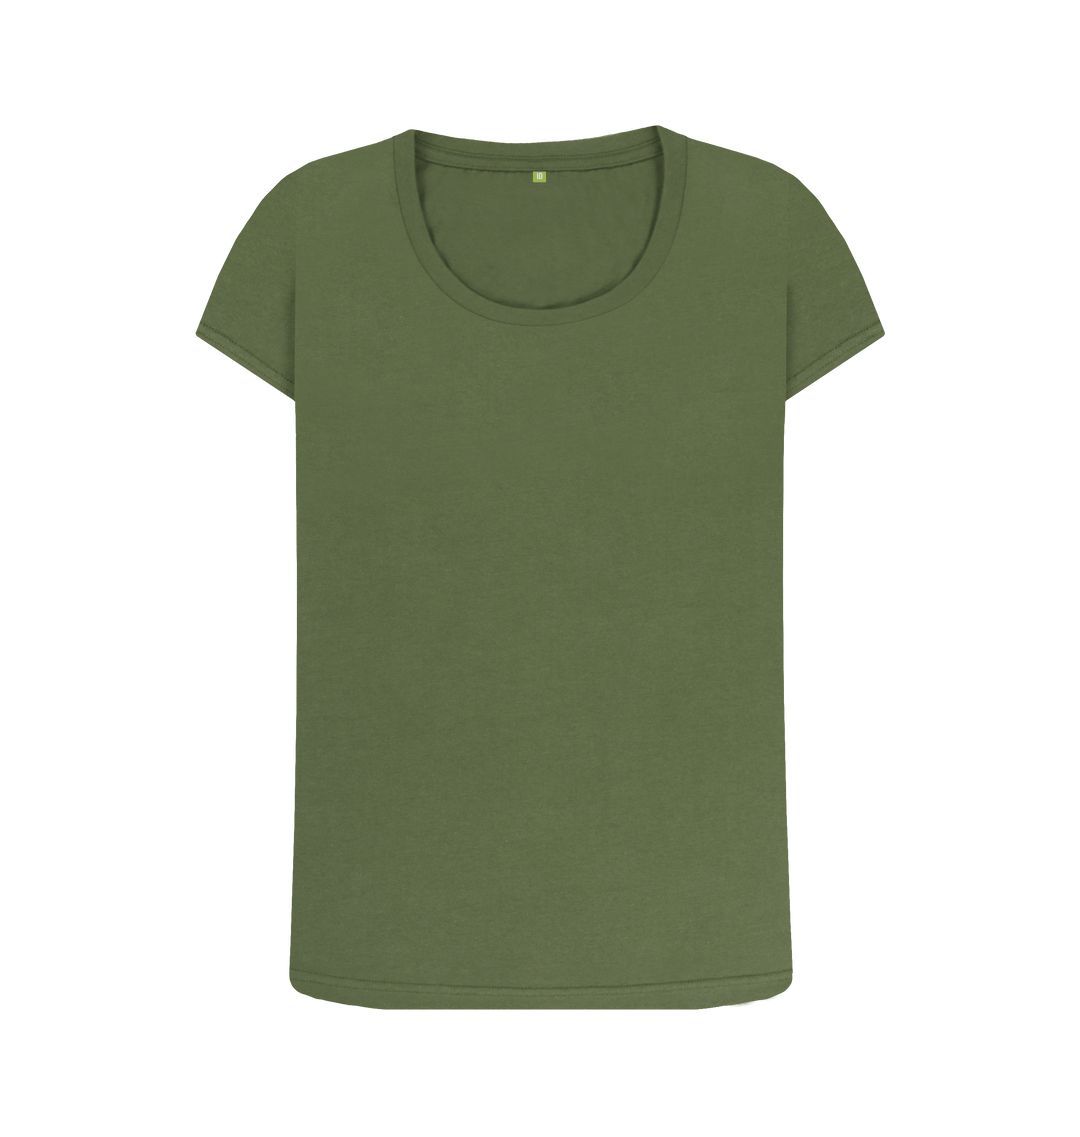 Khaki Women's organic cotton scoop neck t-shirt